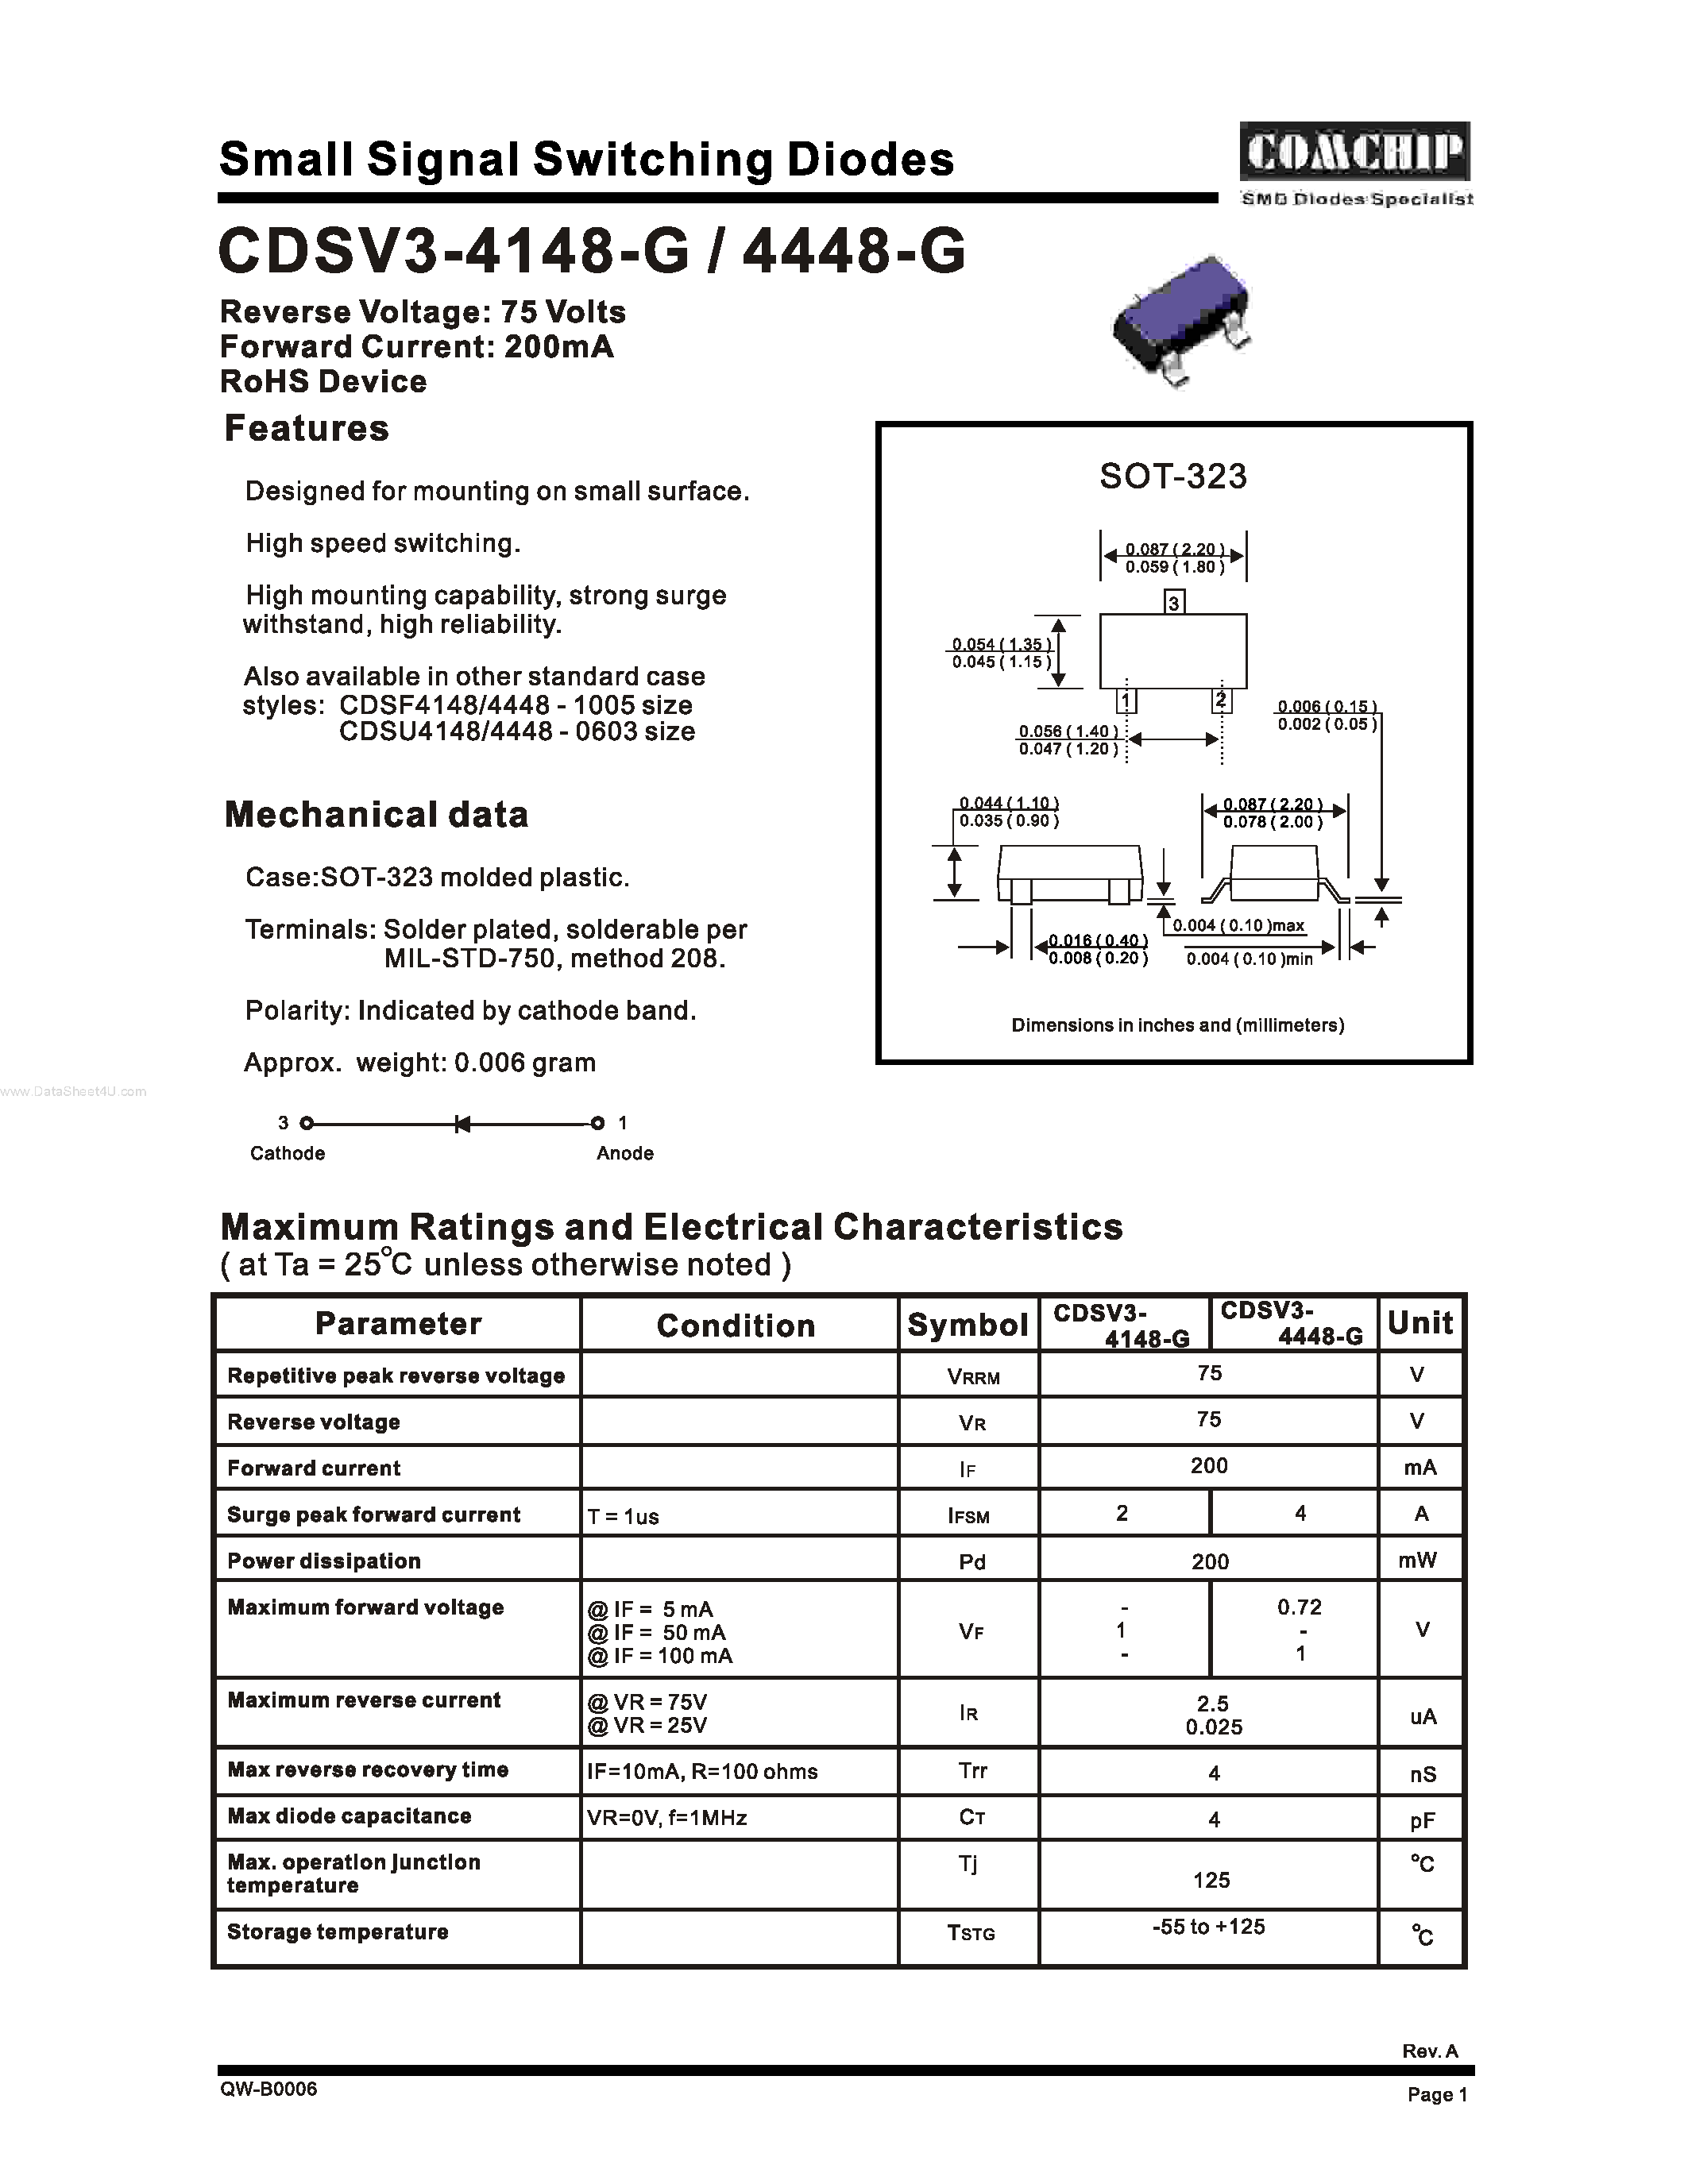 Datasheet CDSV3-4148-G - (CDSV3-4448-G / CDSV3-4148-G) Small-Signal Switching Diode page 1